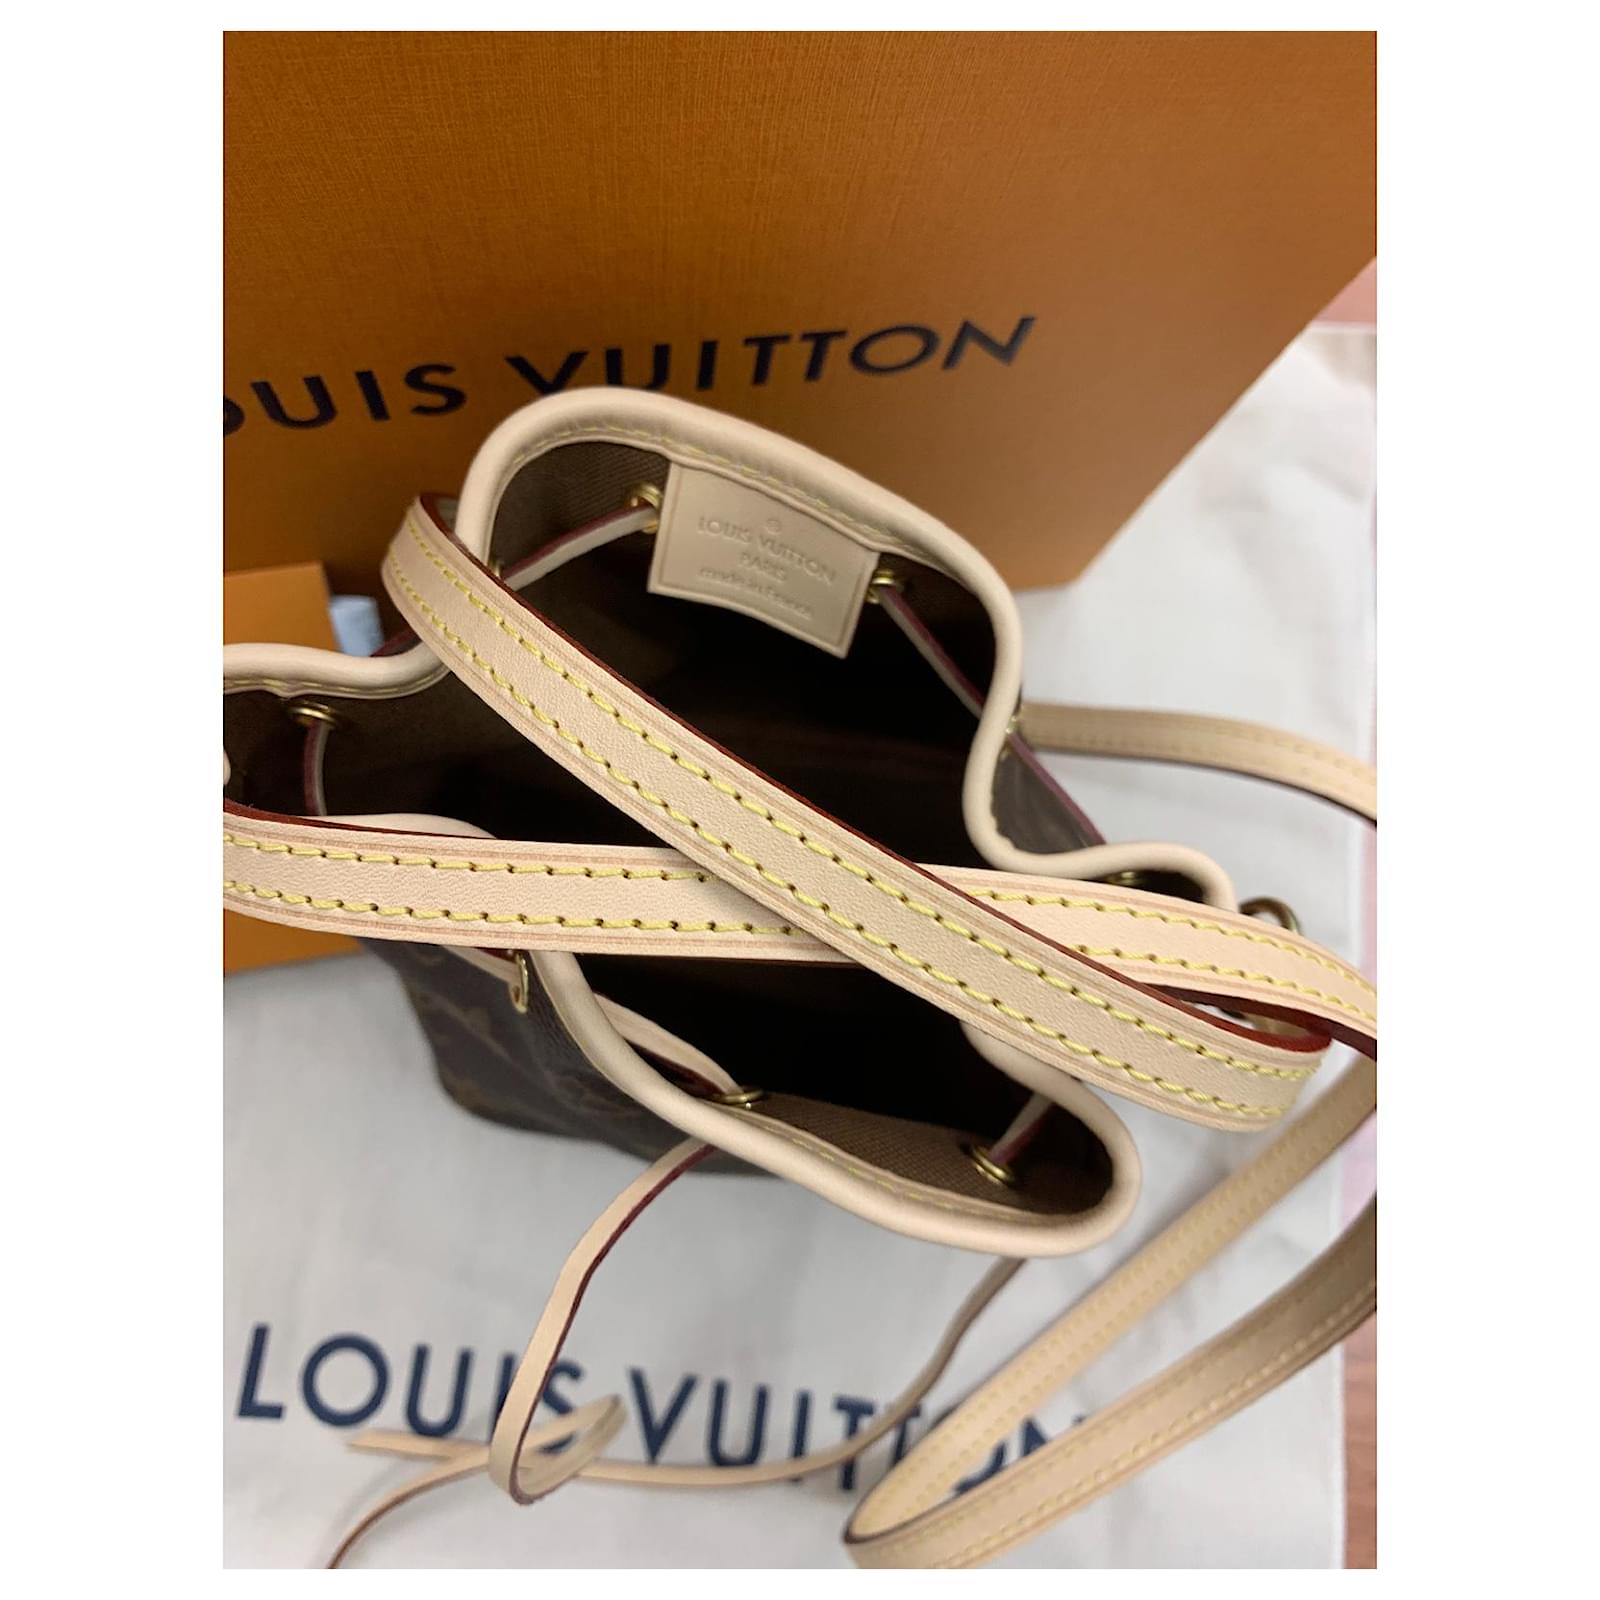 Noe Louis Vuitton Nano Noè bucket bag, New, never worn, original